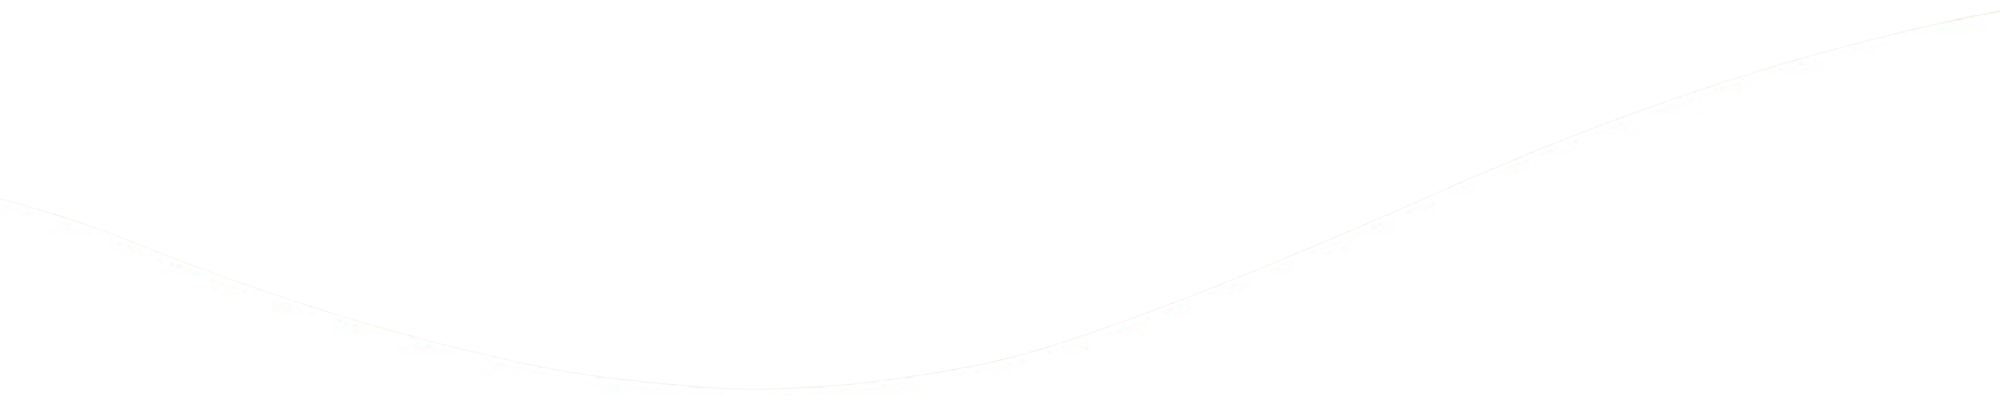 Duptronics curve image